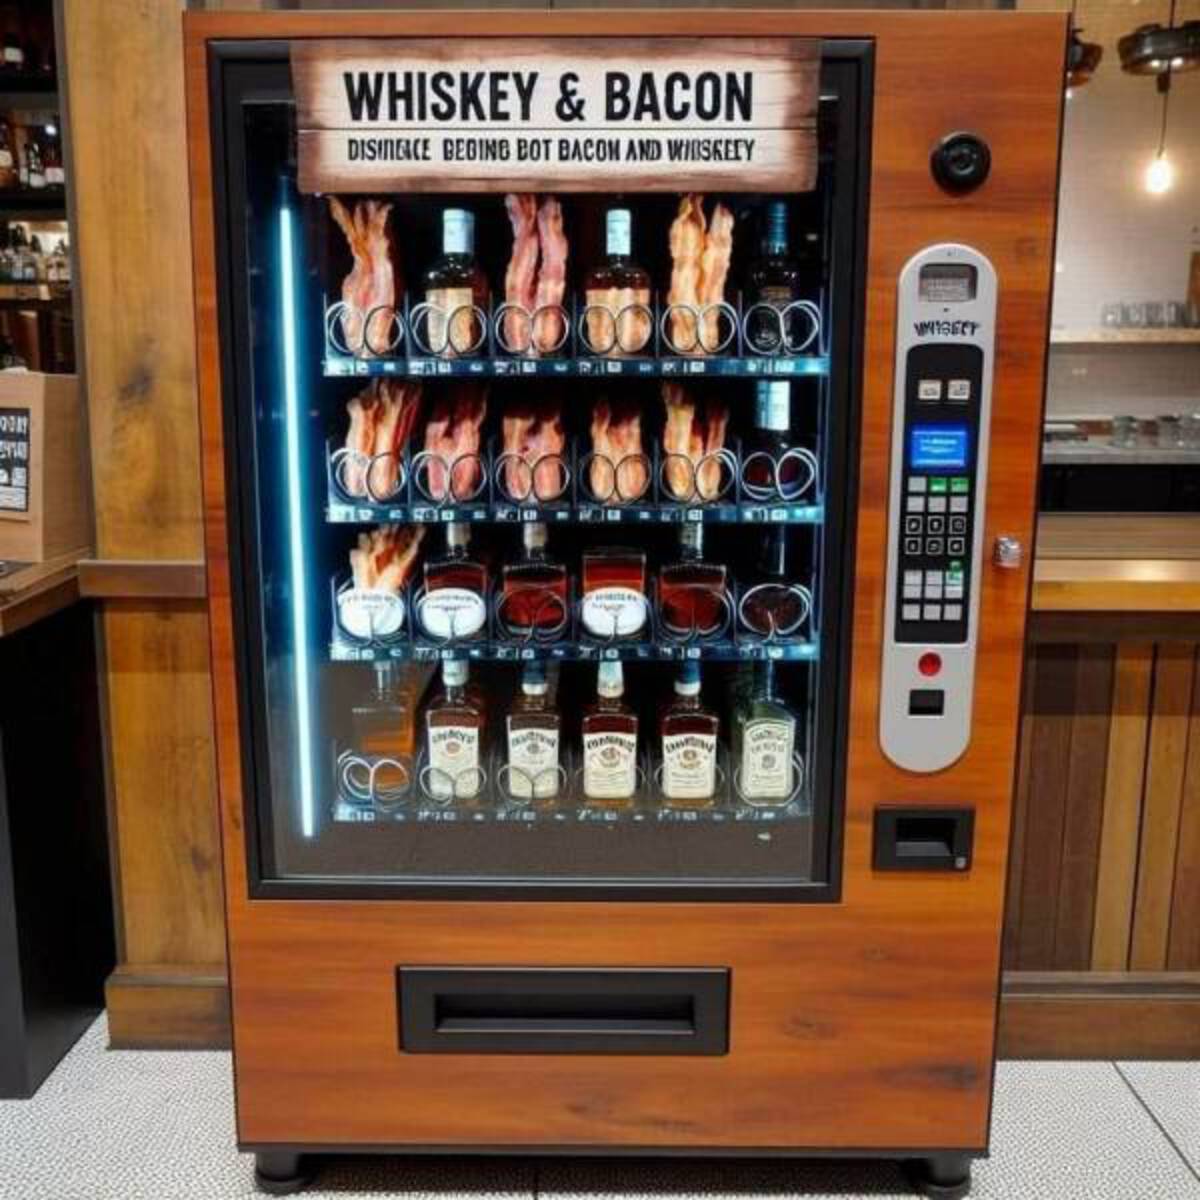 vending machine - 5410 Whiskey & Bacon Disinence Beding Bot Bacon And Whiskey cococoooooo 000000 61 Corn W100 M Wisect 1100